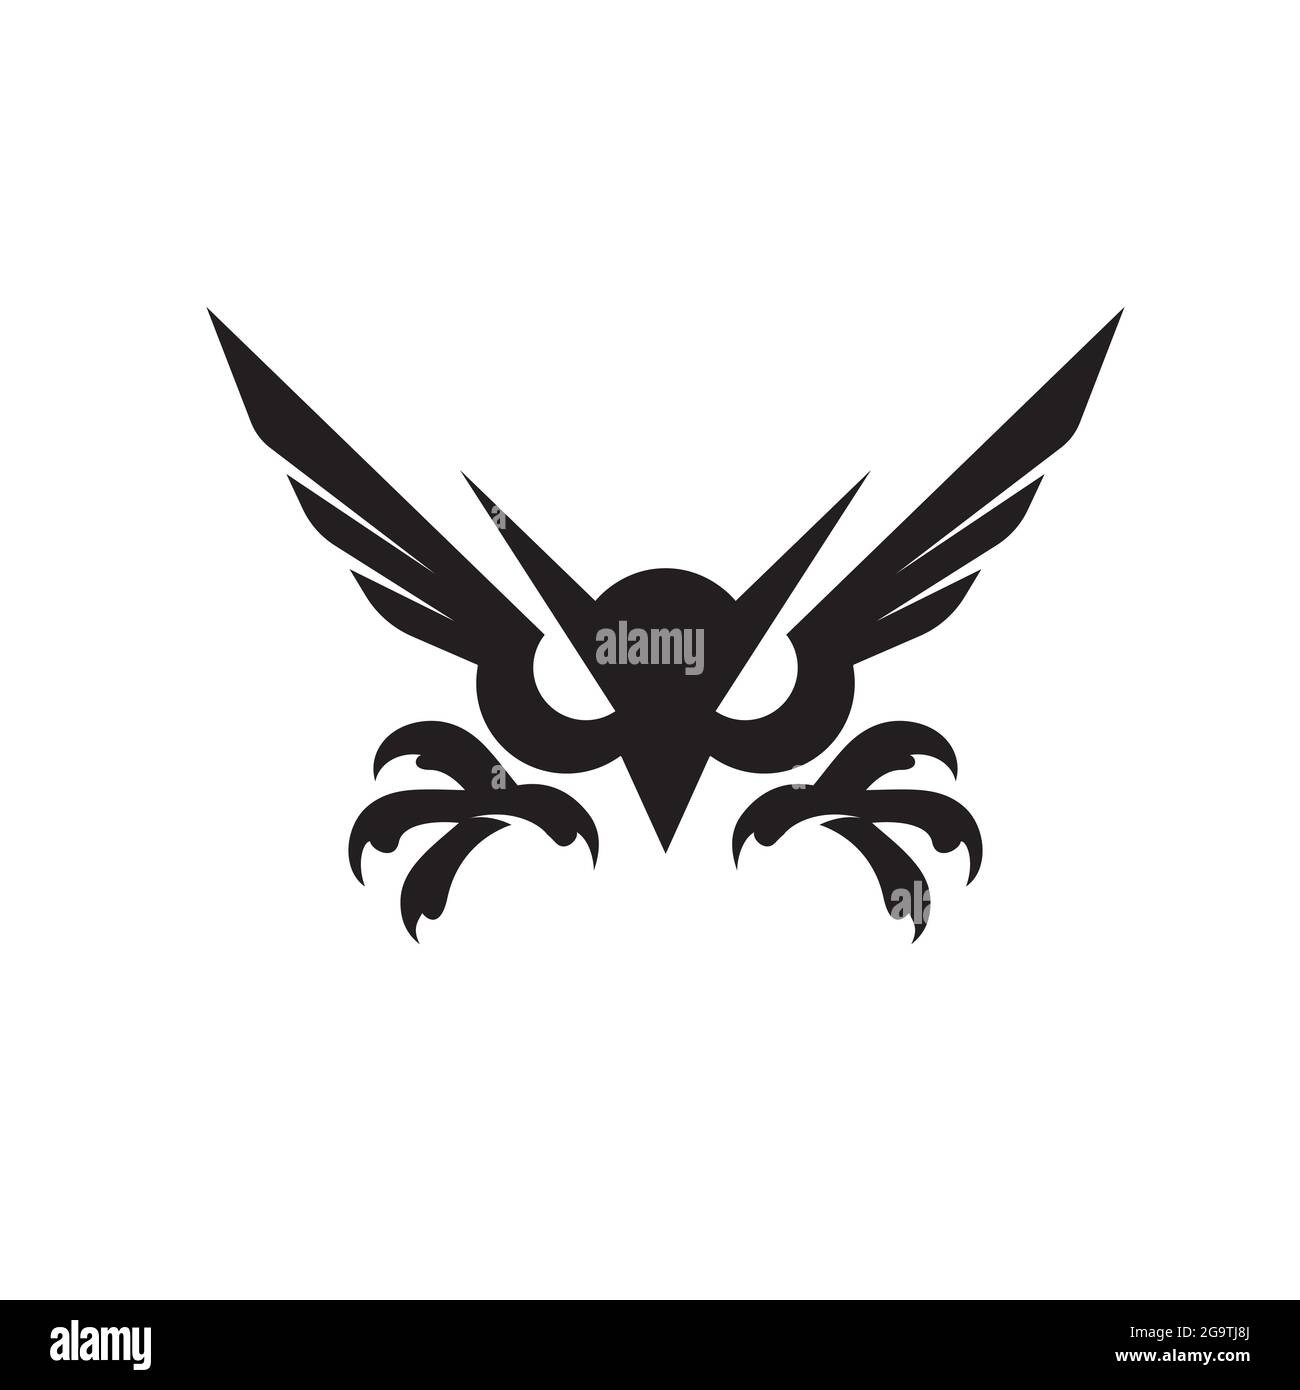 Eulenjagd-Logo mit weit geöffneten Talonen Stock Vektor